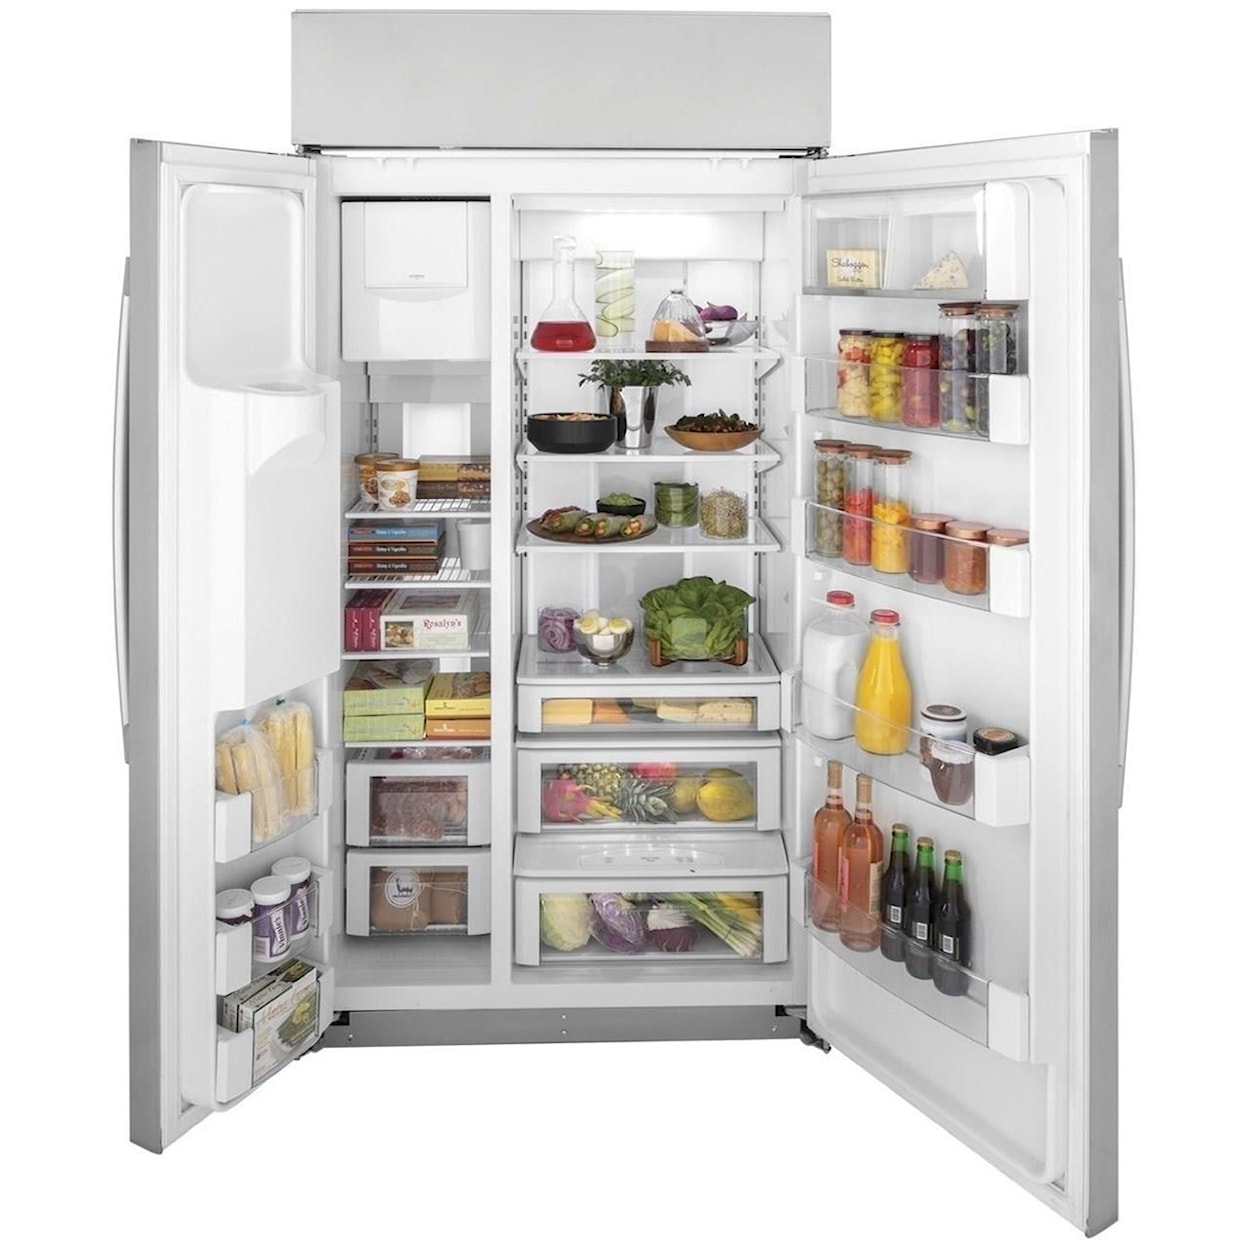 GE Appliances GE Profile Side-By-Side Refrigerators GE Profile™ Series 42" Smart Refrigerator